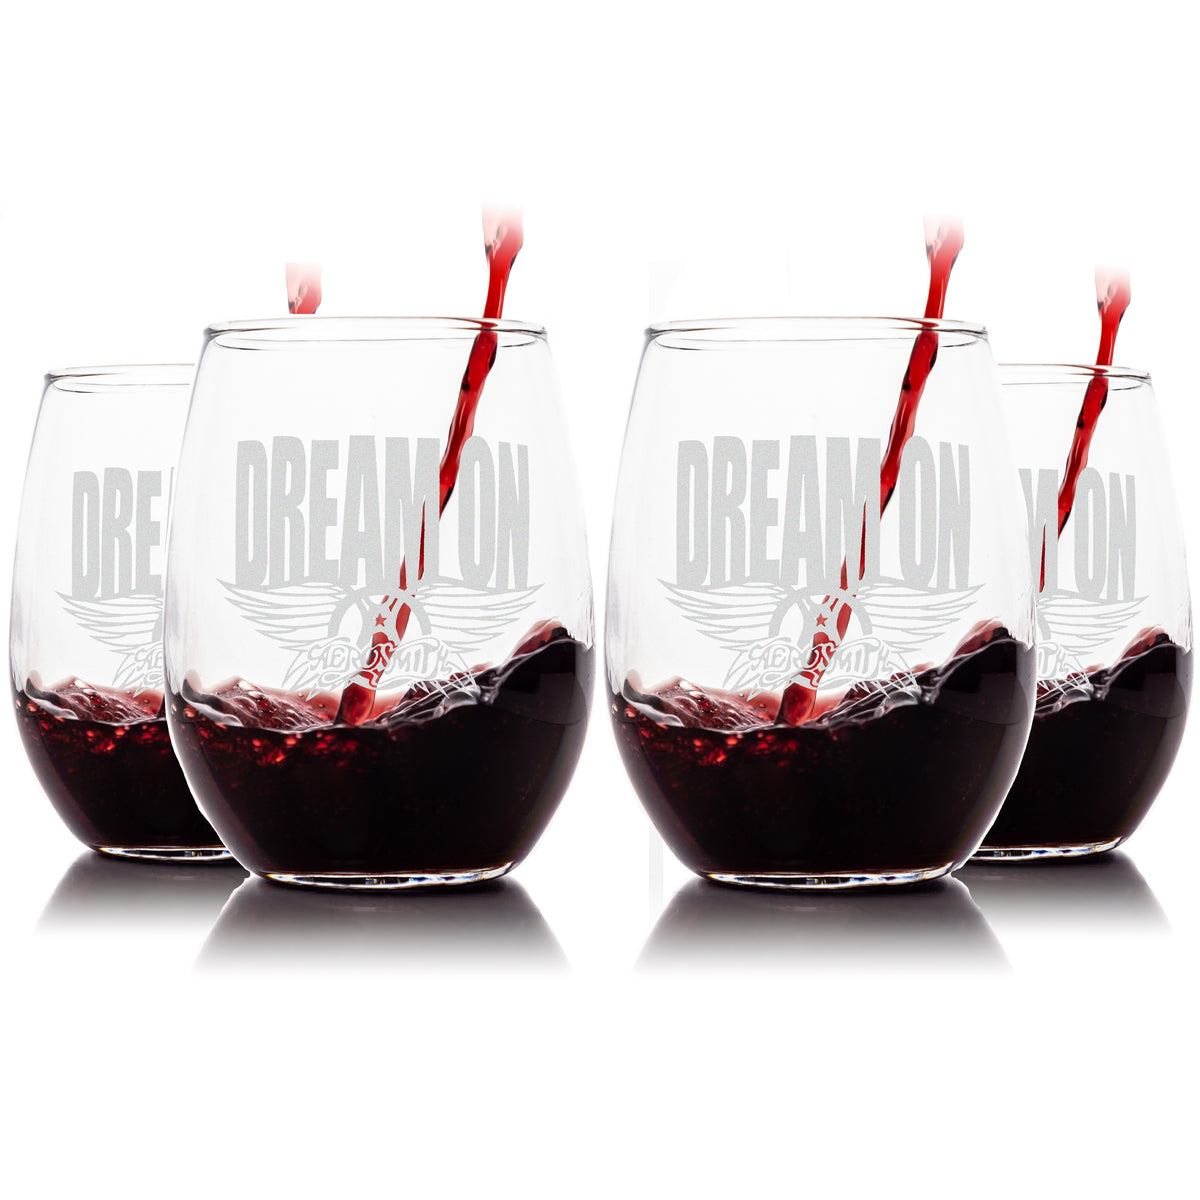 AEROSMITH: Stemless wine glass - Dream On Set of 4